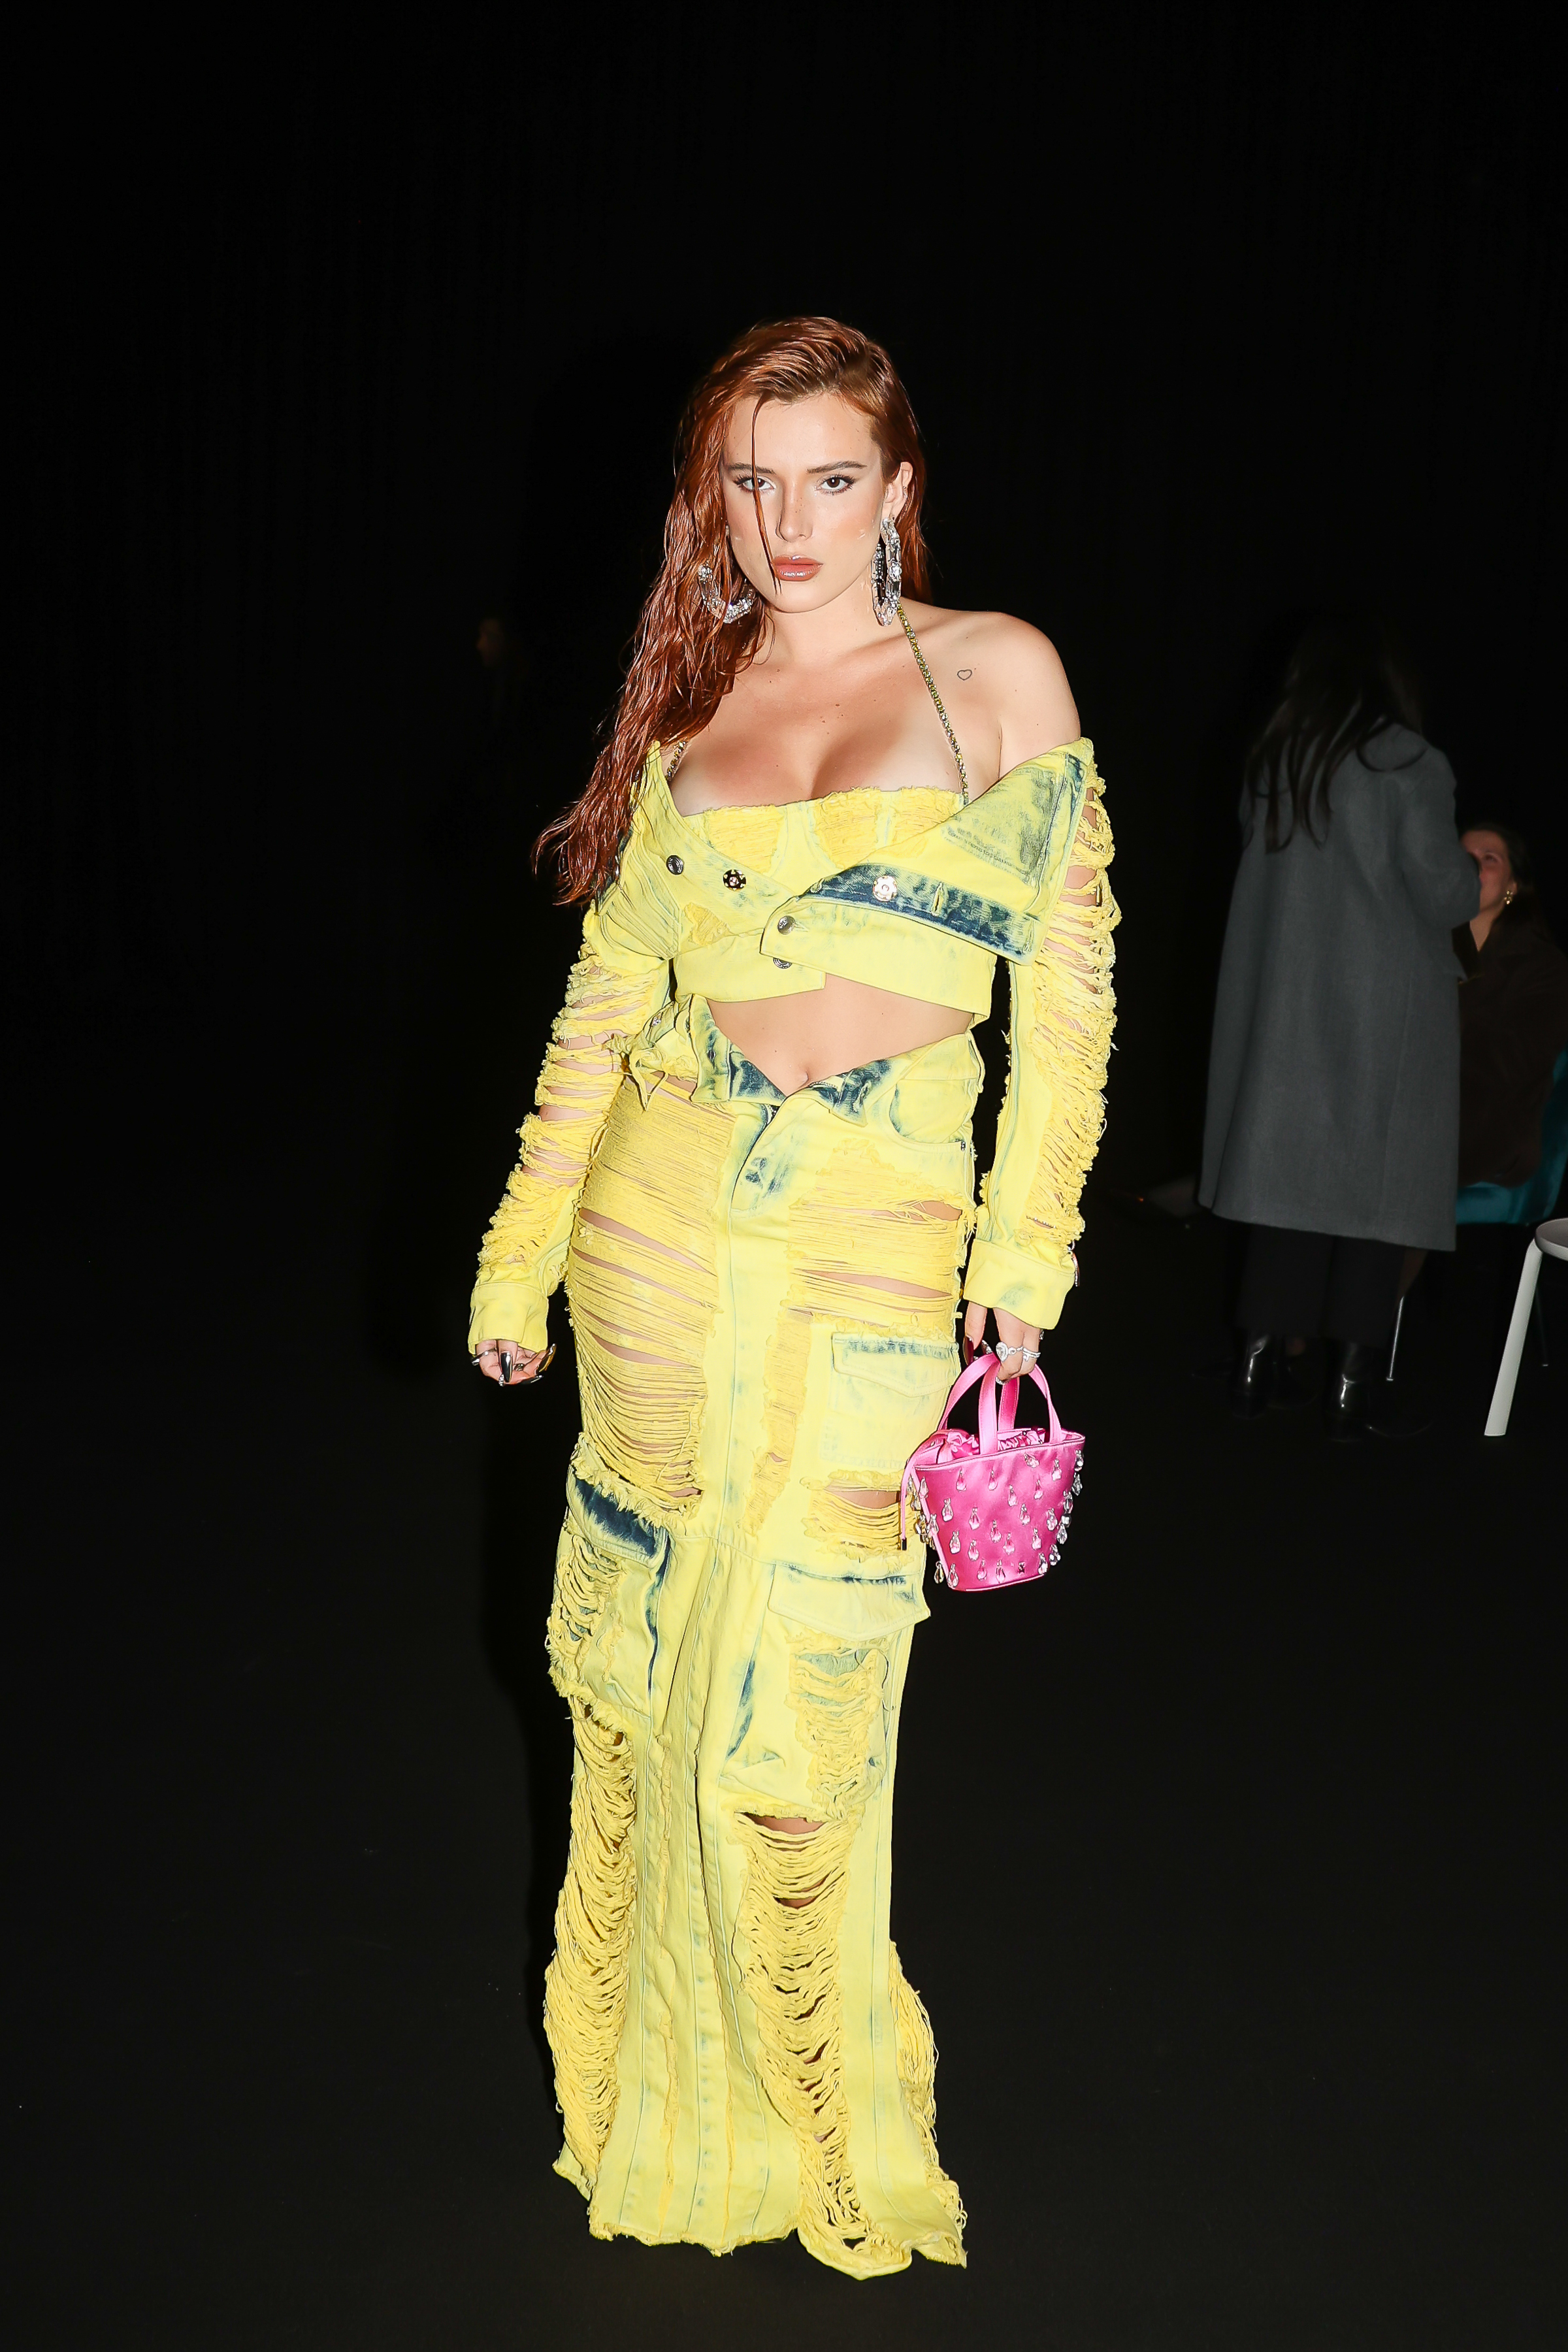 Bella Thorne at GCDS Fashion Show in Milan 02/23/2023